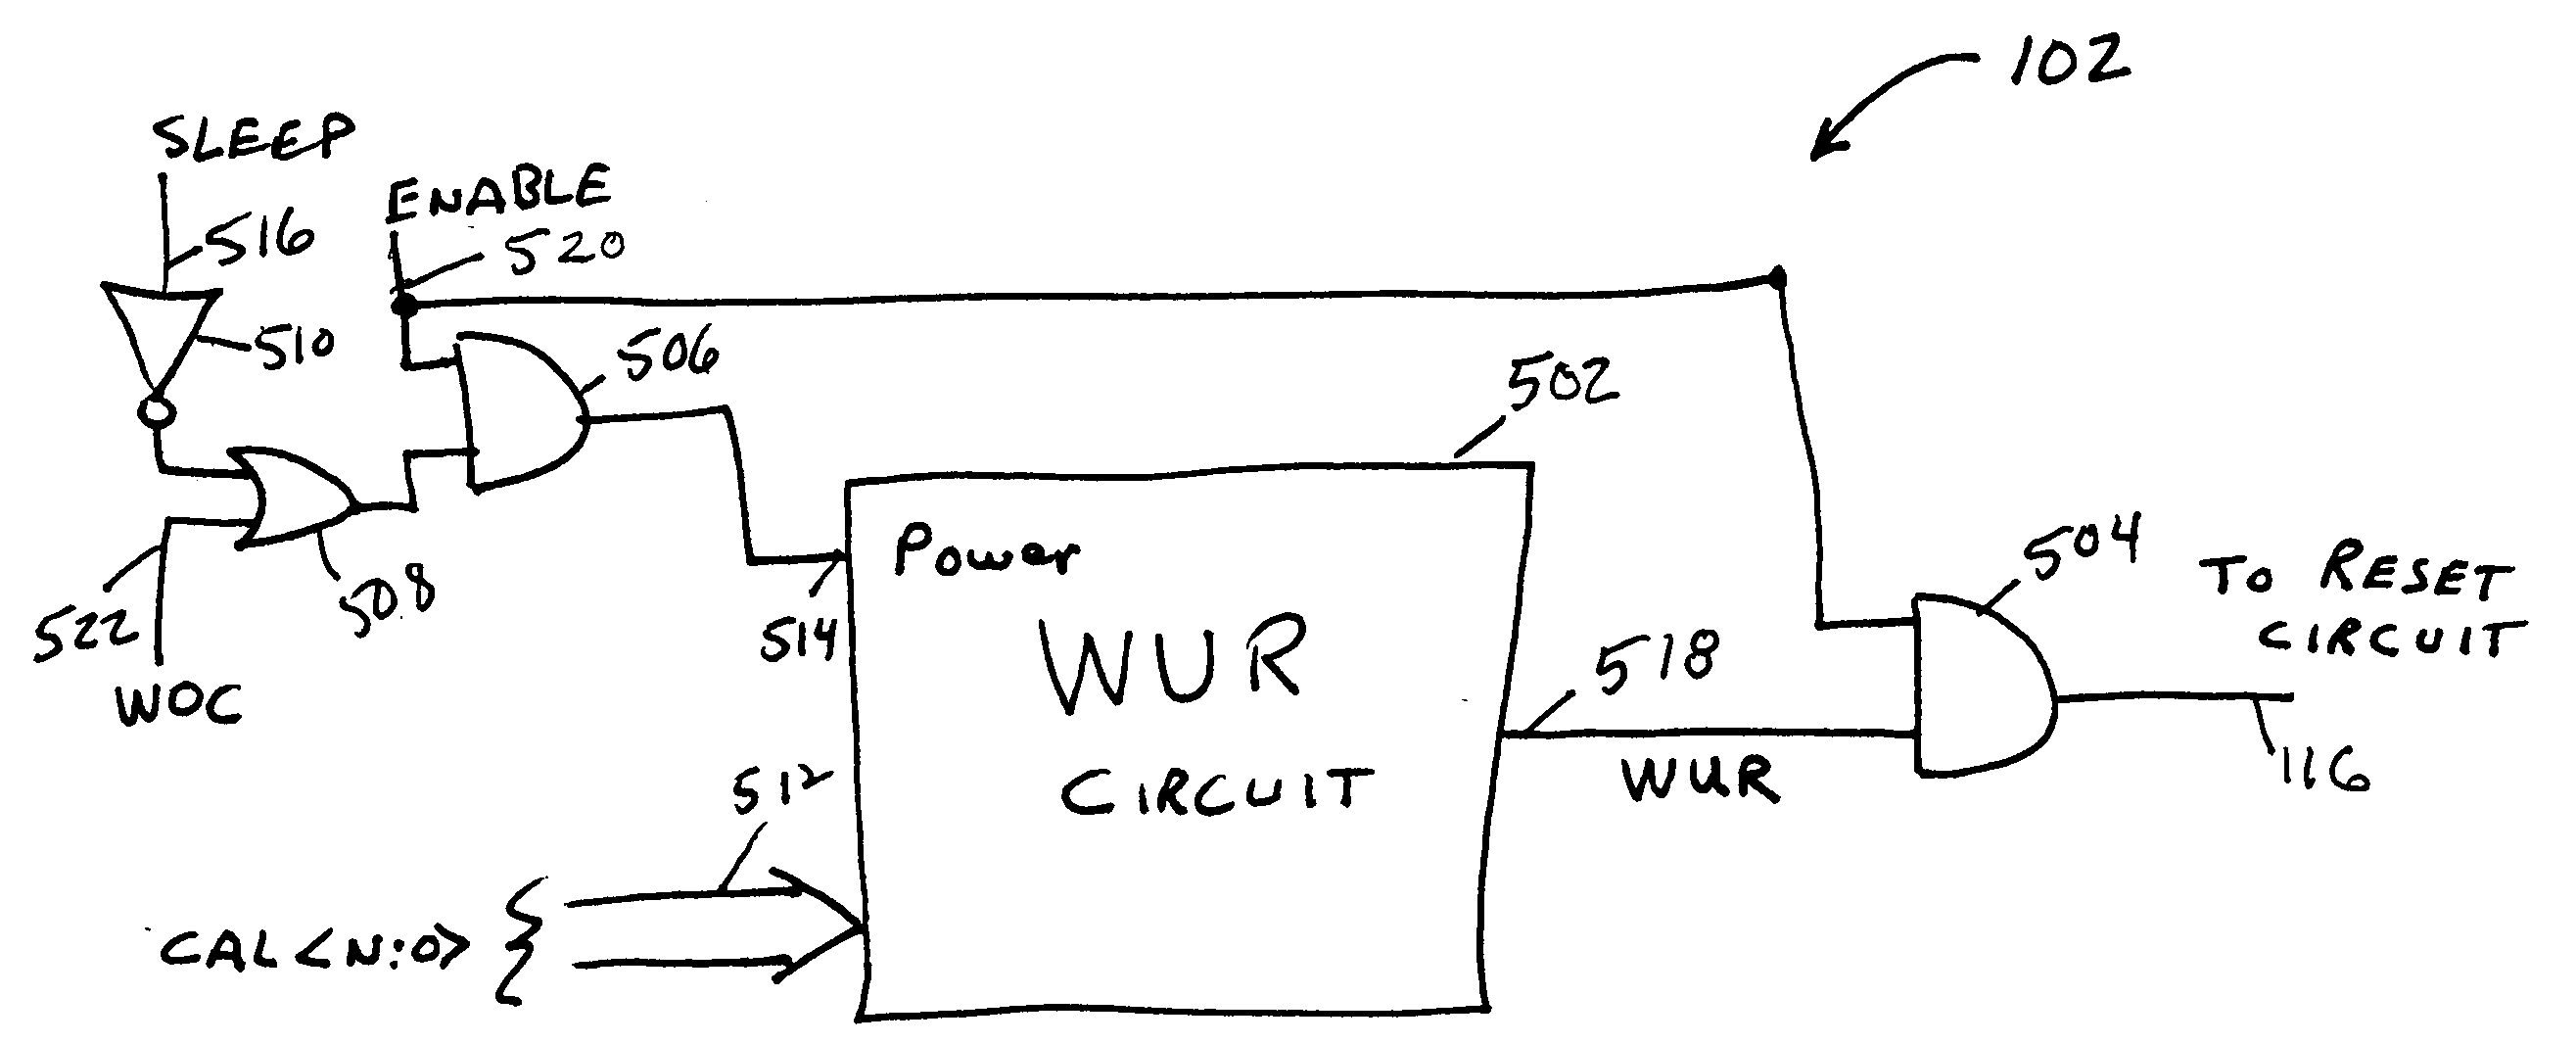 Wake-up reset circuit